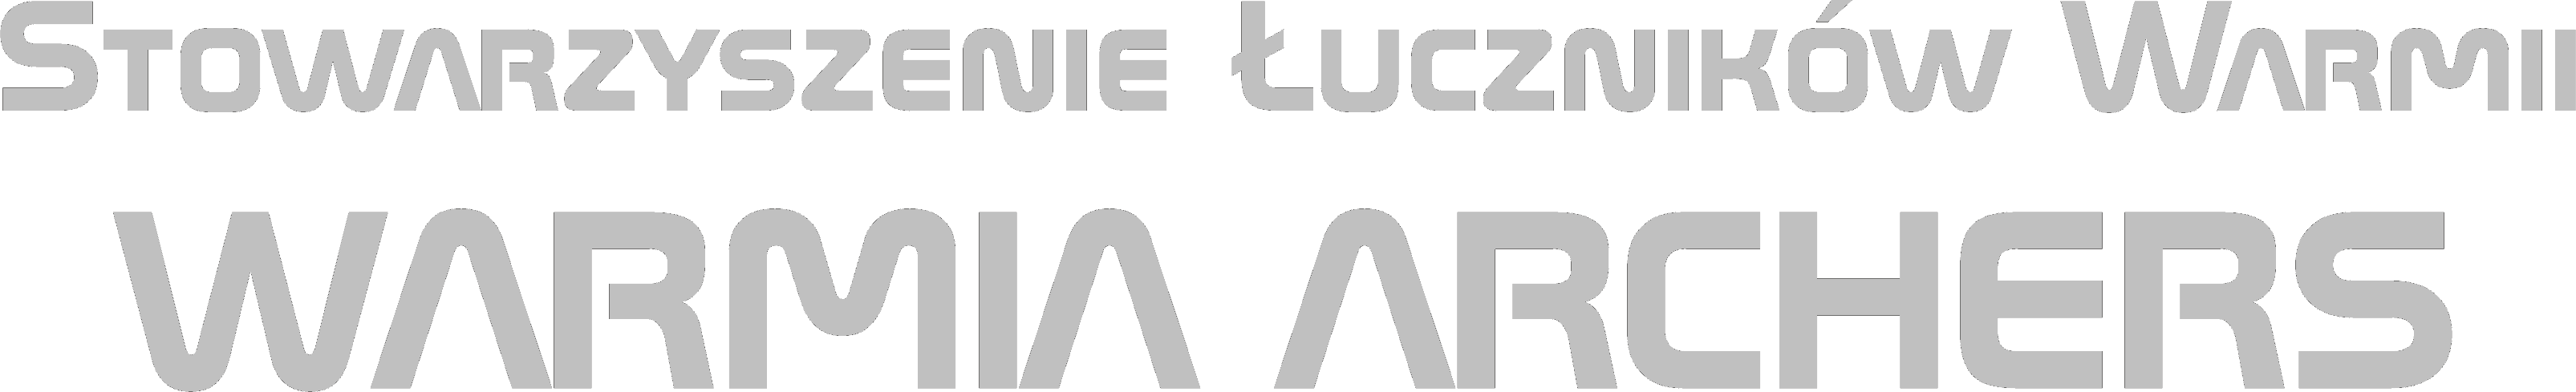 logo1 gray